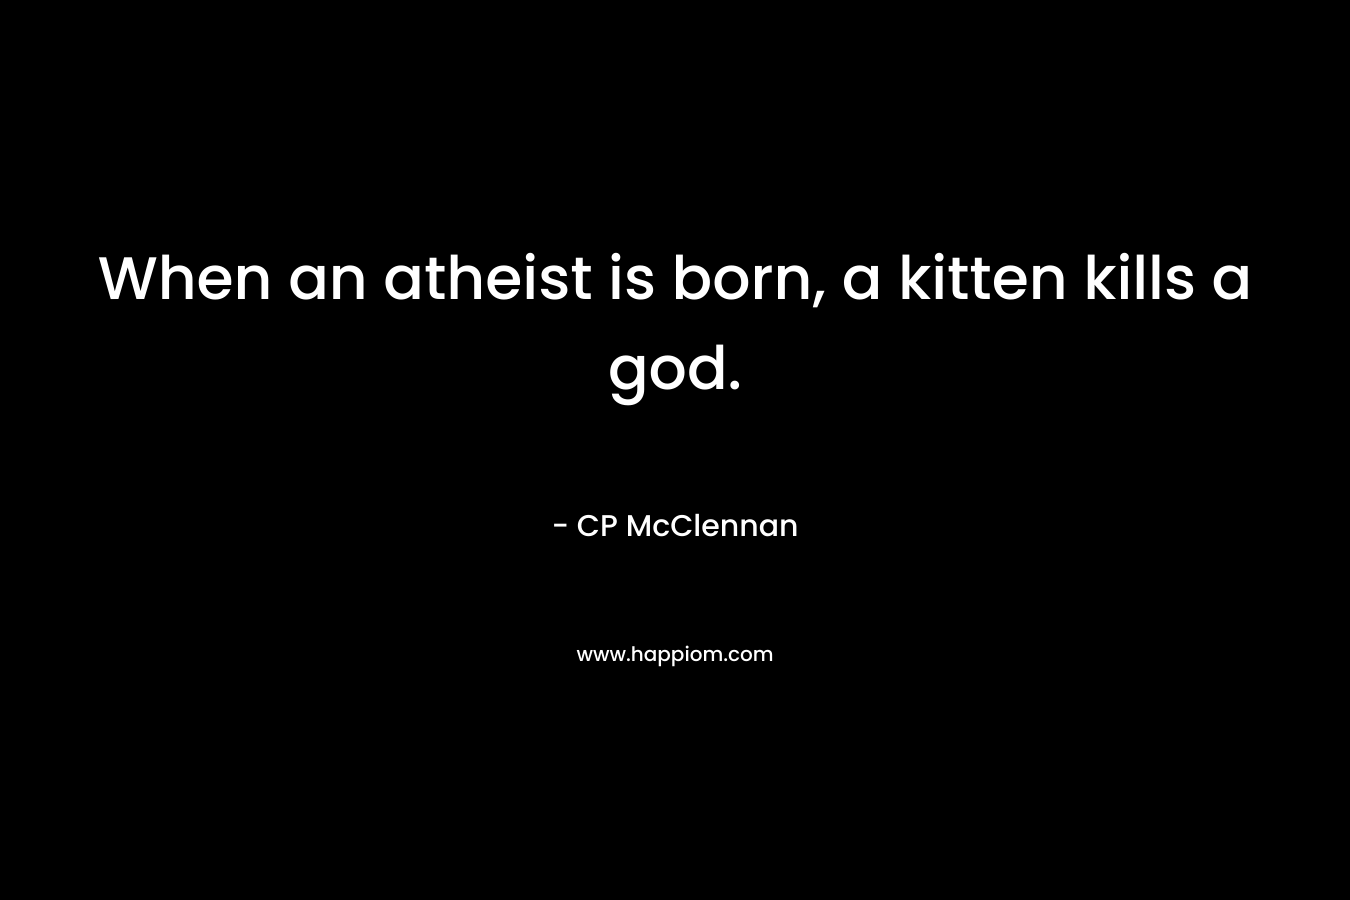 When an atheist is born, a kitten kills a god.